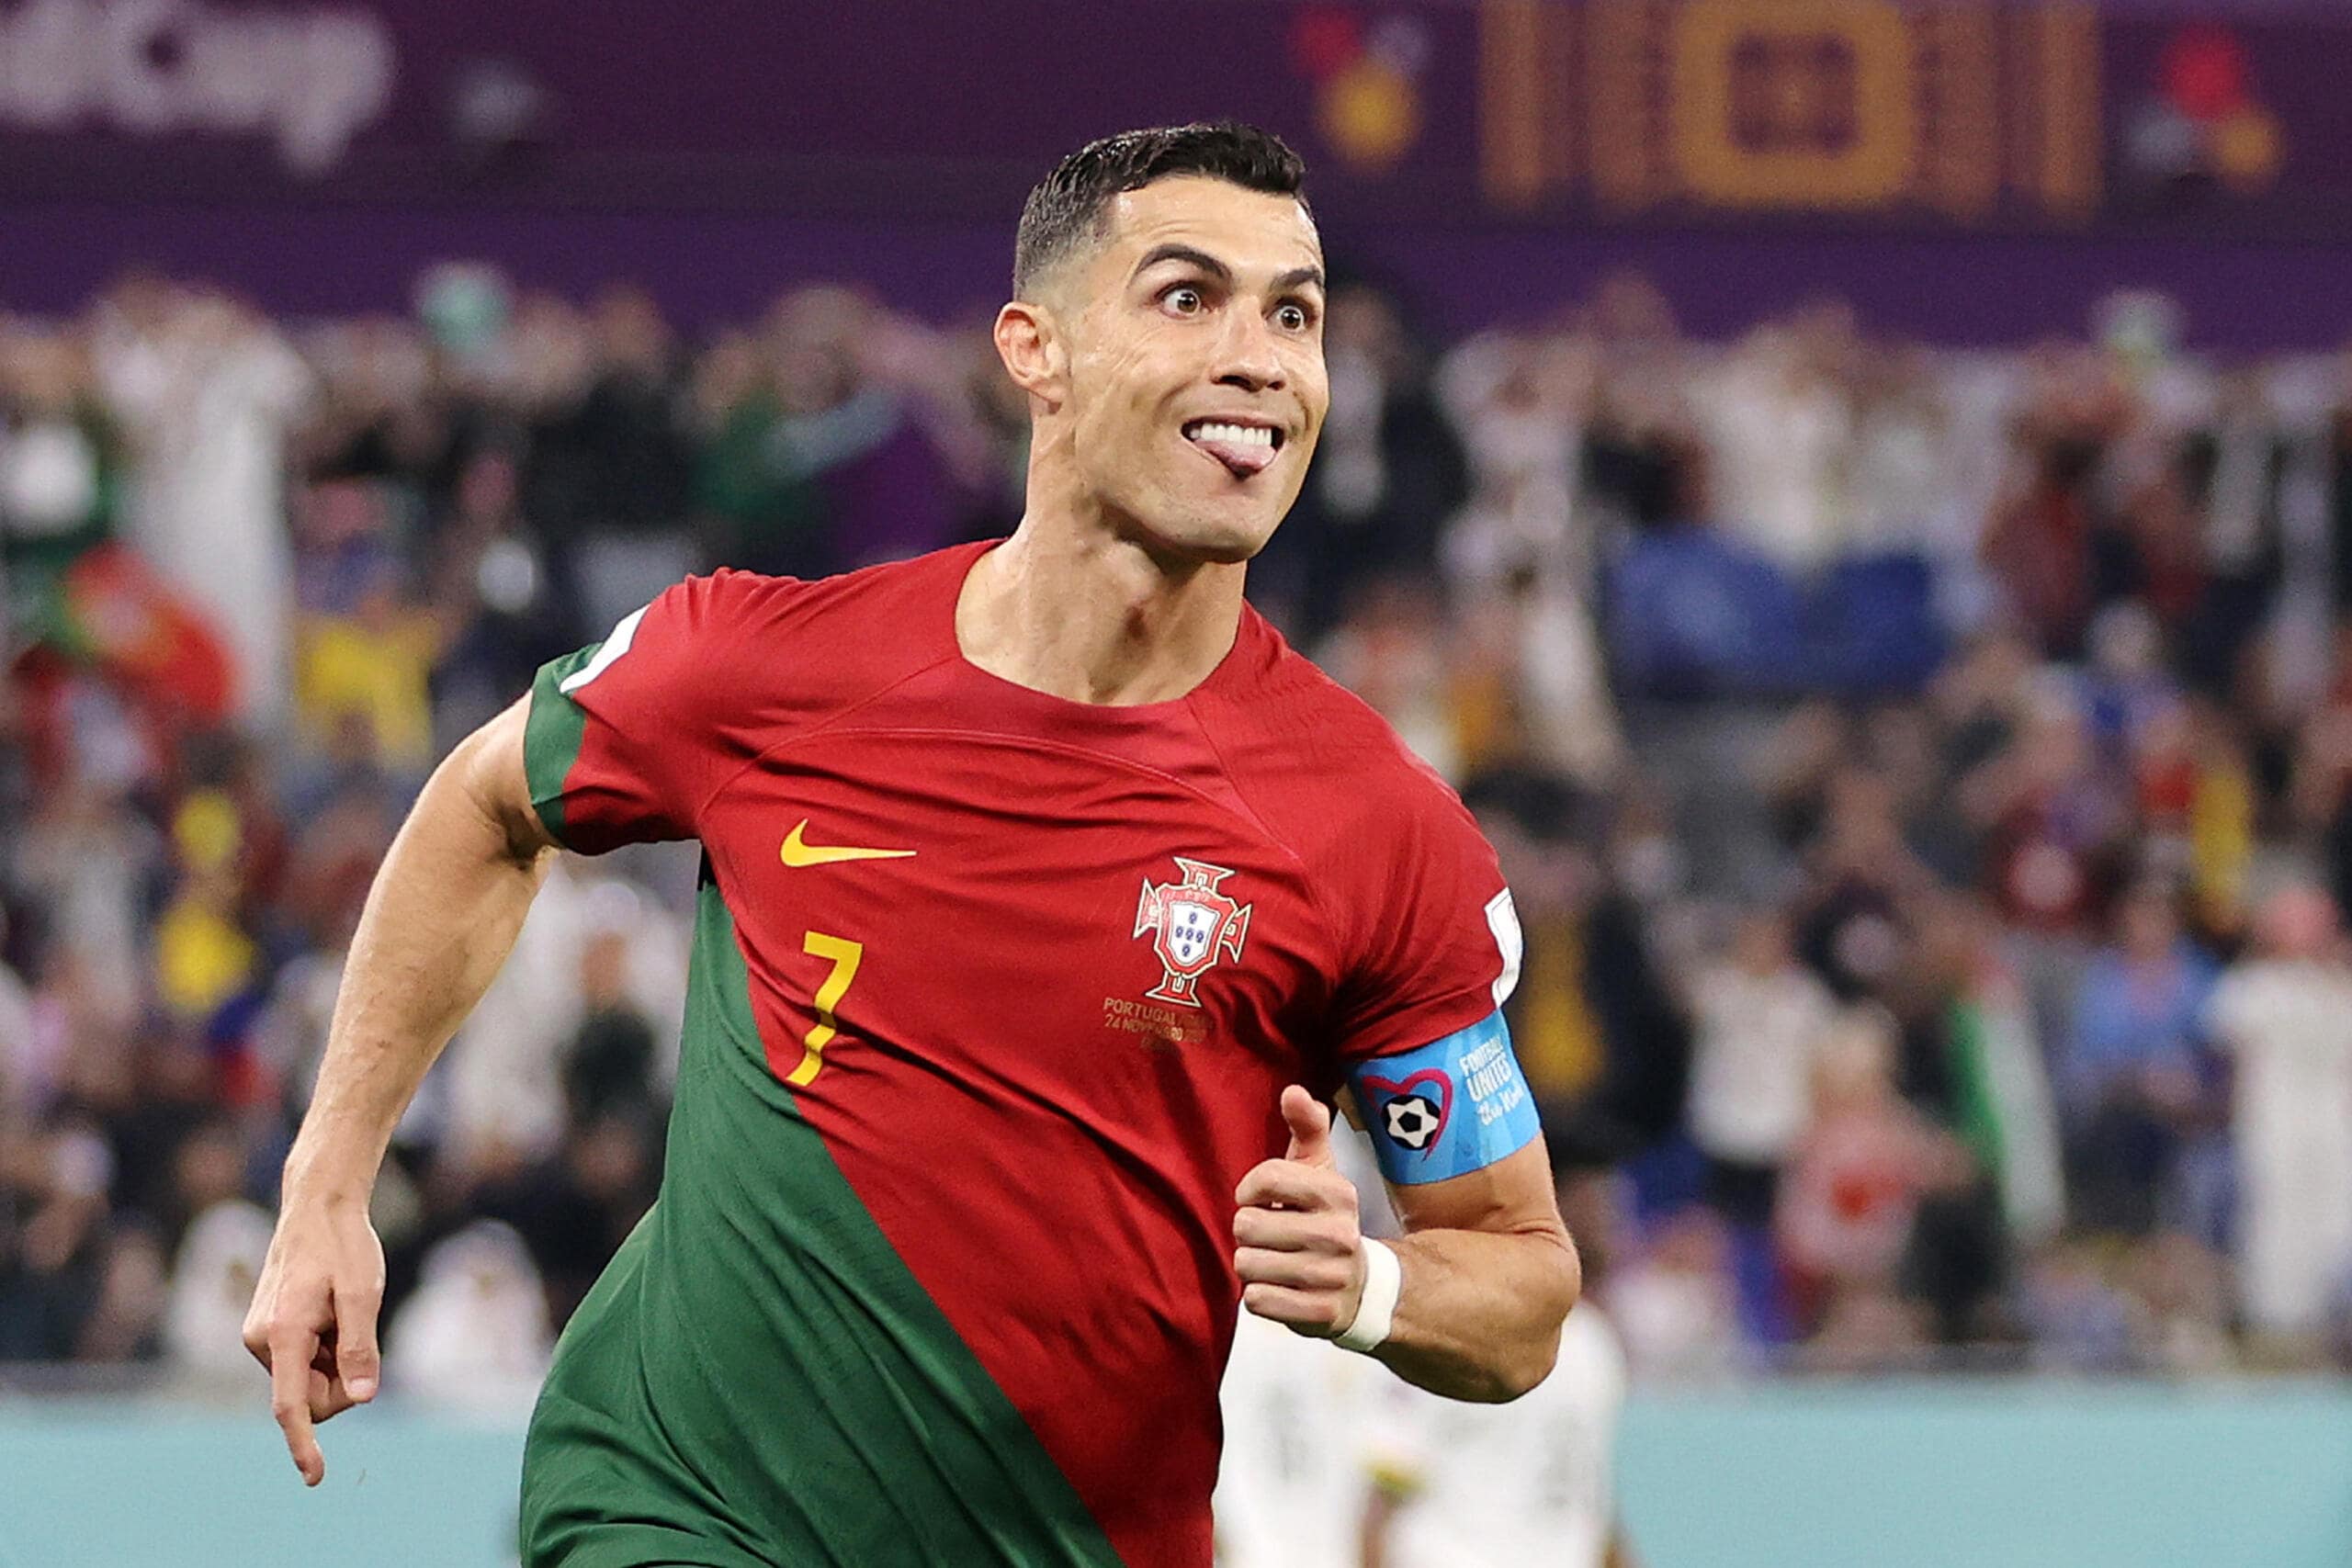 Portogallo-Ghana 3-2, Ronaldo record vince ma rischia